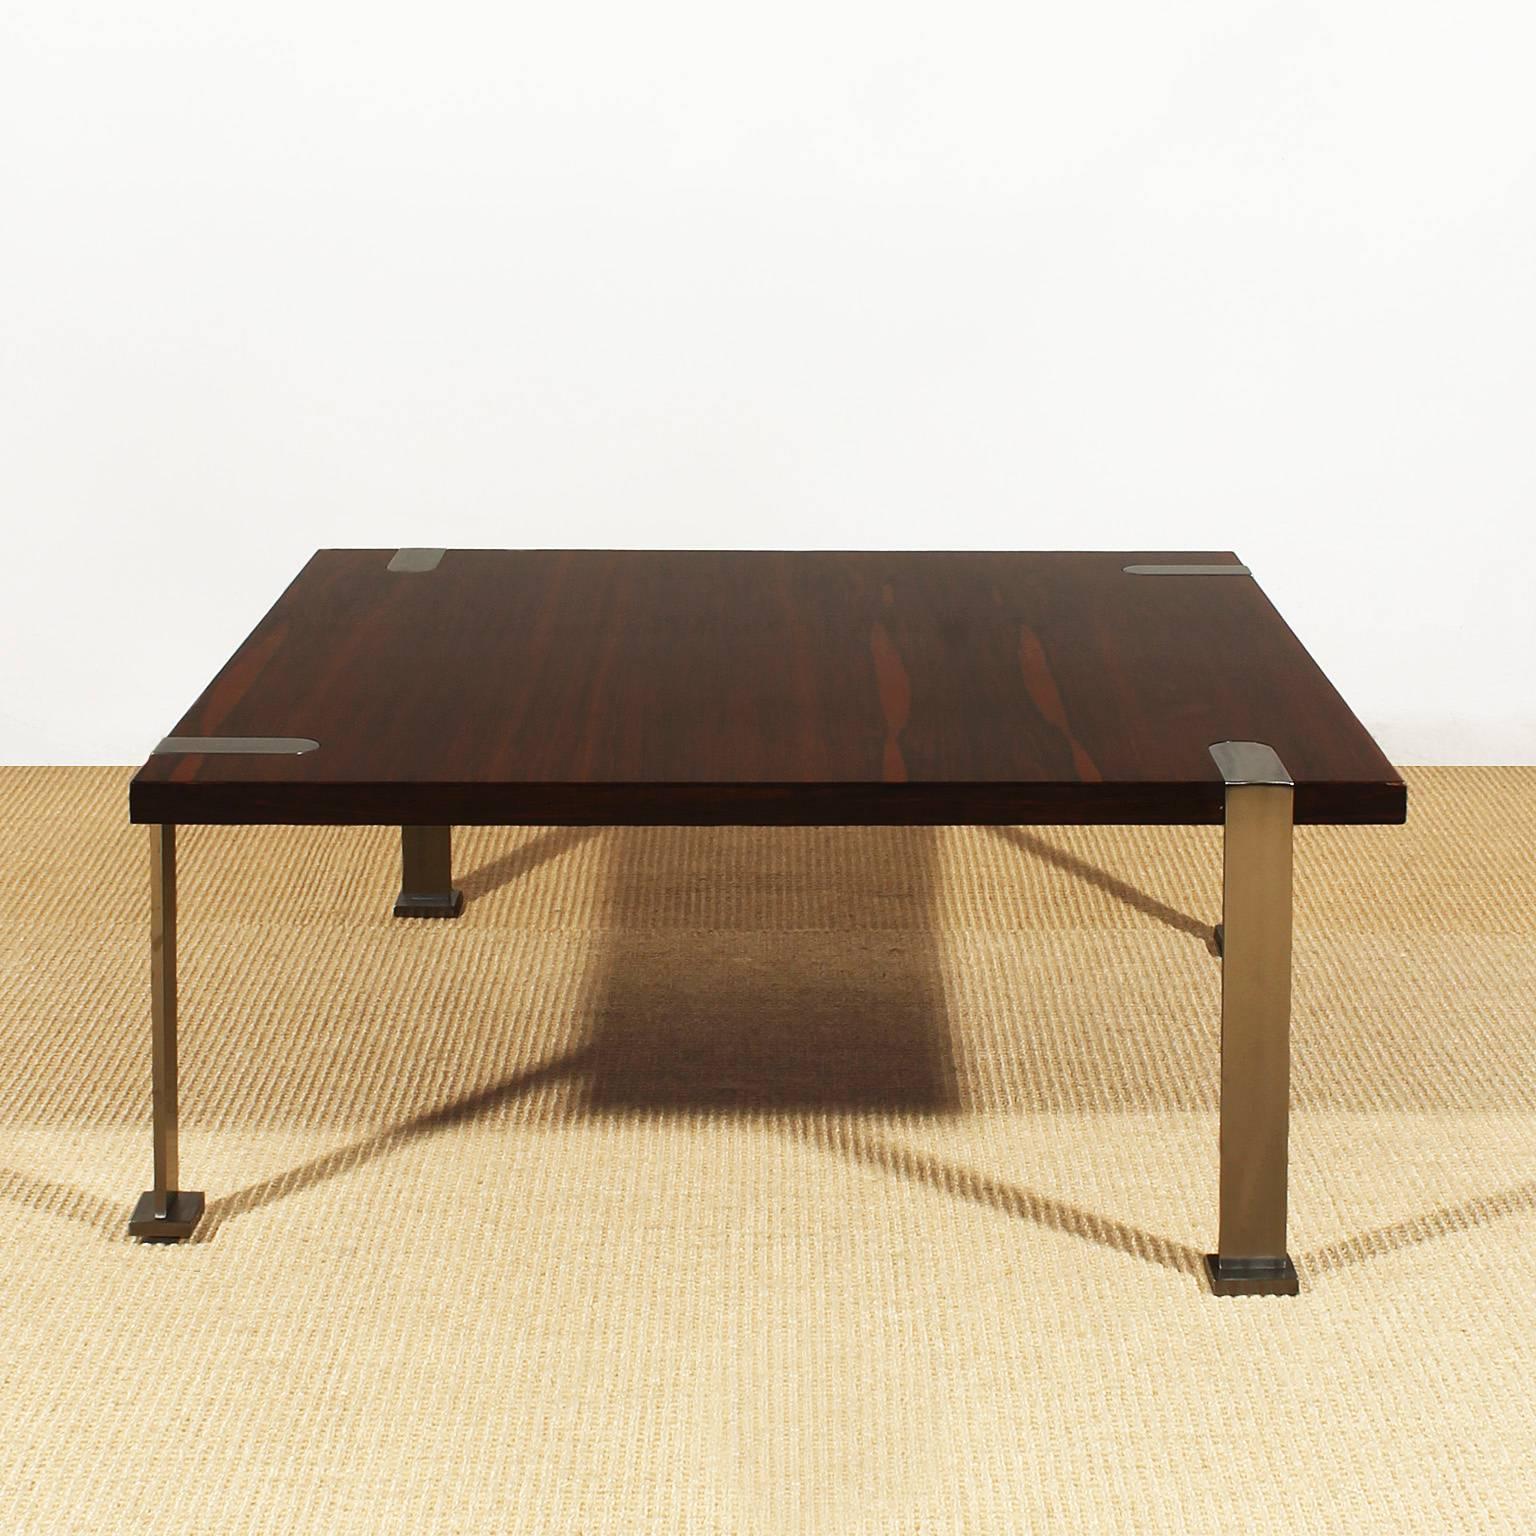 Coffee table, solid mahogany, mahogany veneer, french polish, asymmetrical polished steel stands.
Italy c. 1960